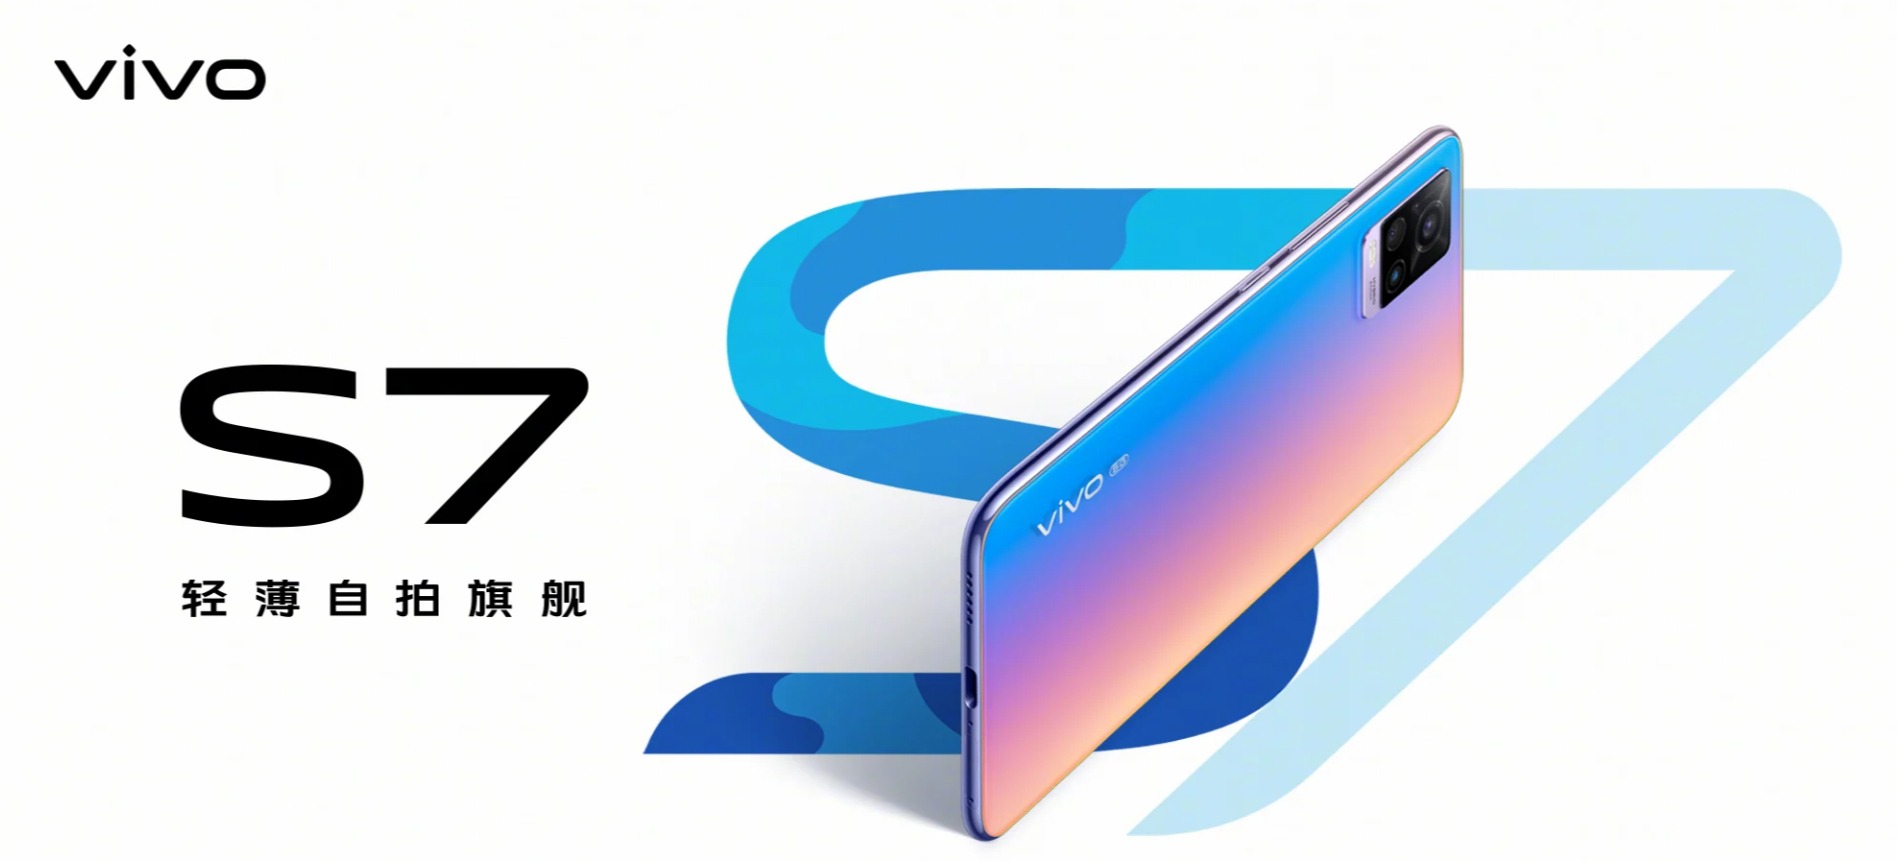 Vivo S7 smartphone